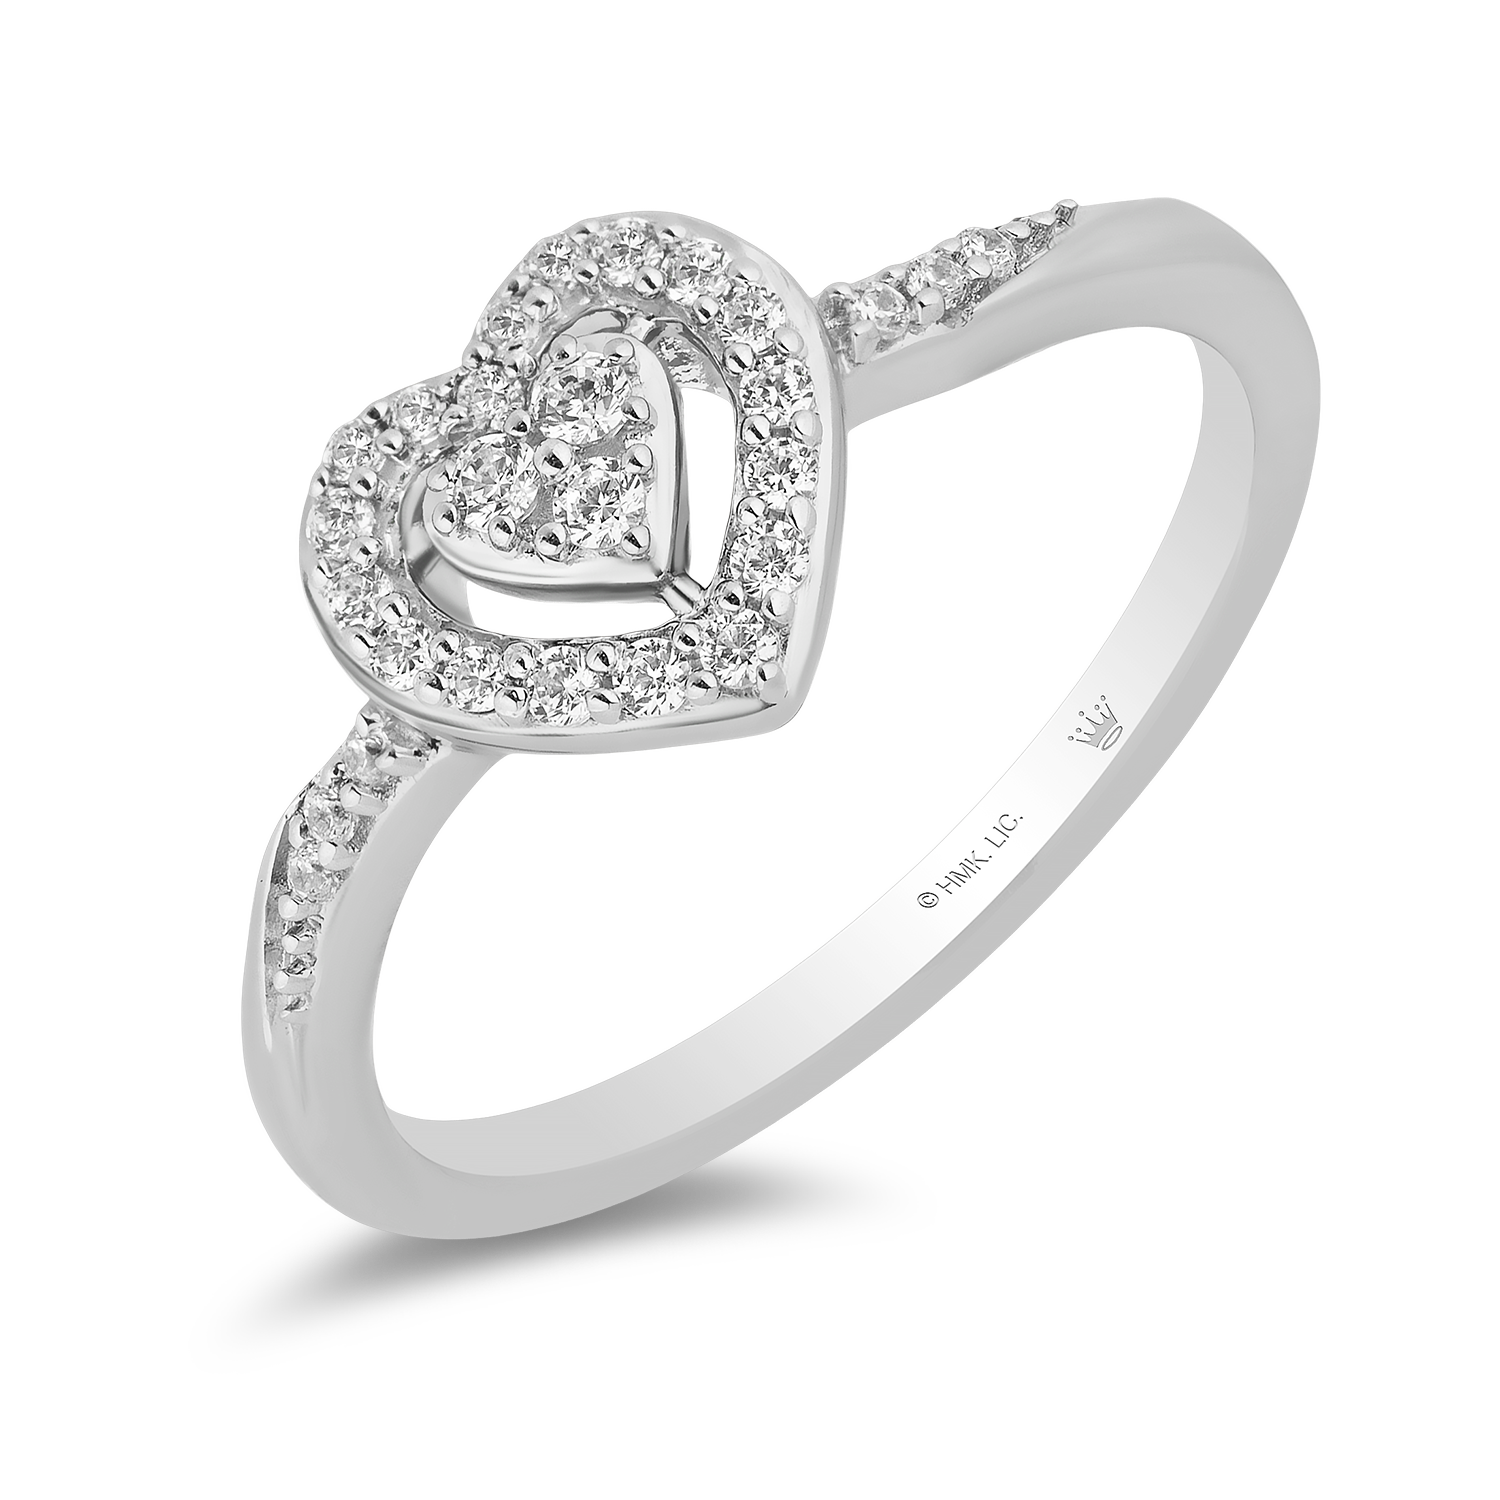 Aura heart-shaped diamond ring in platinum | De Beers US